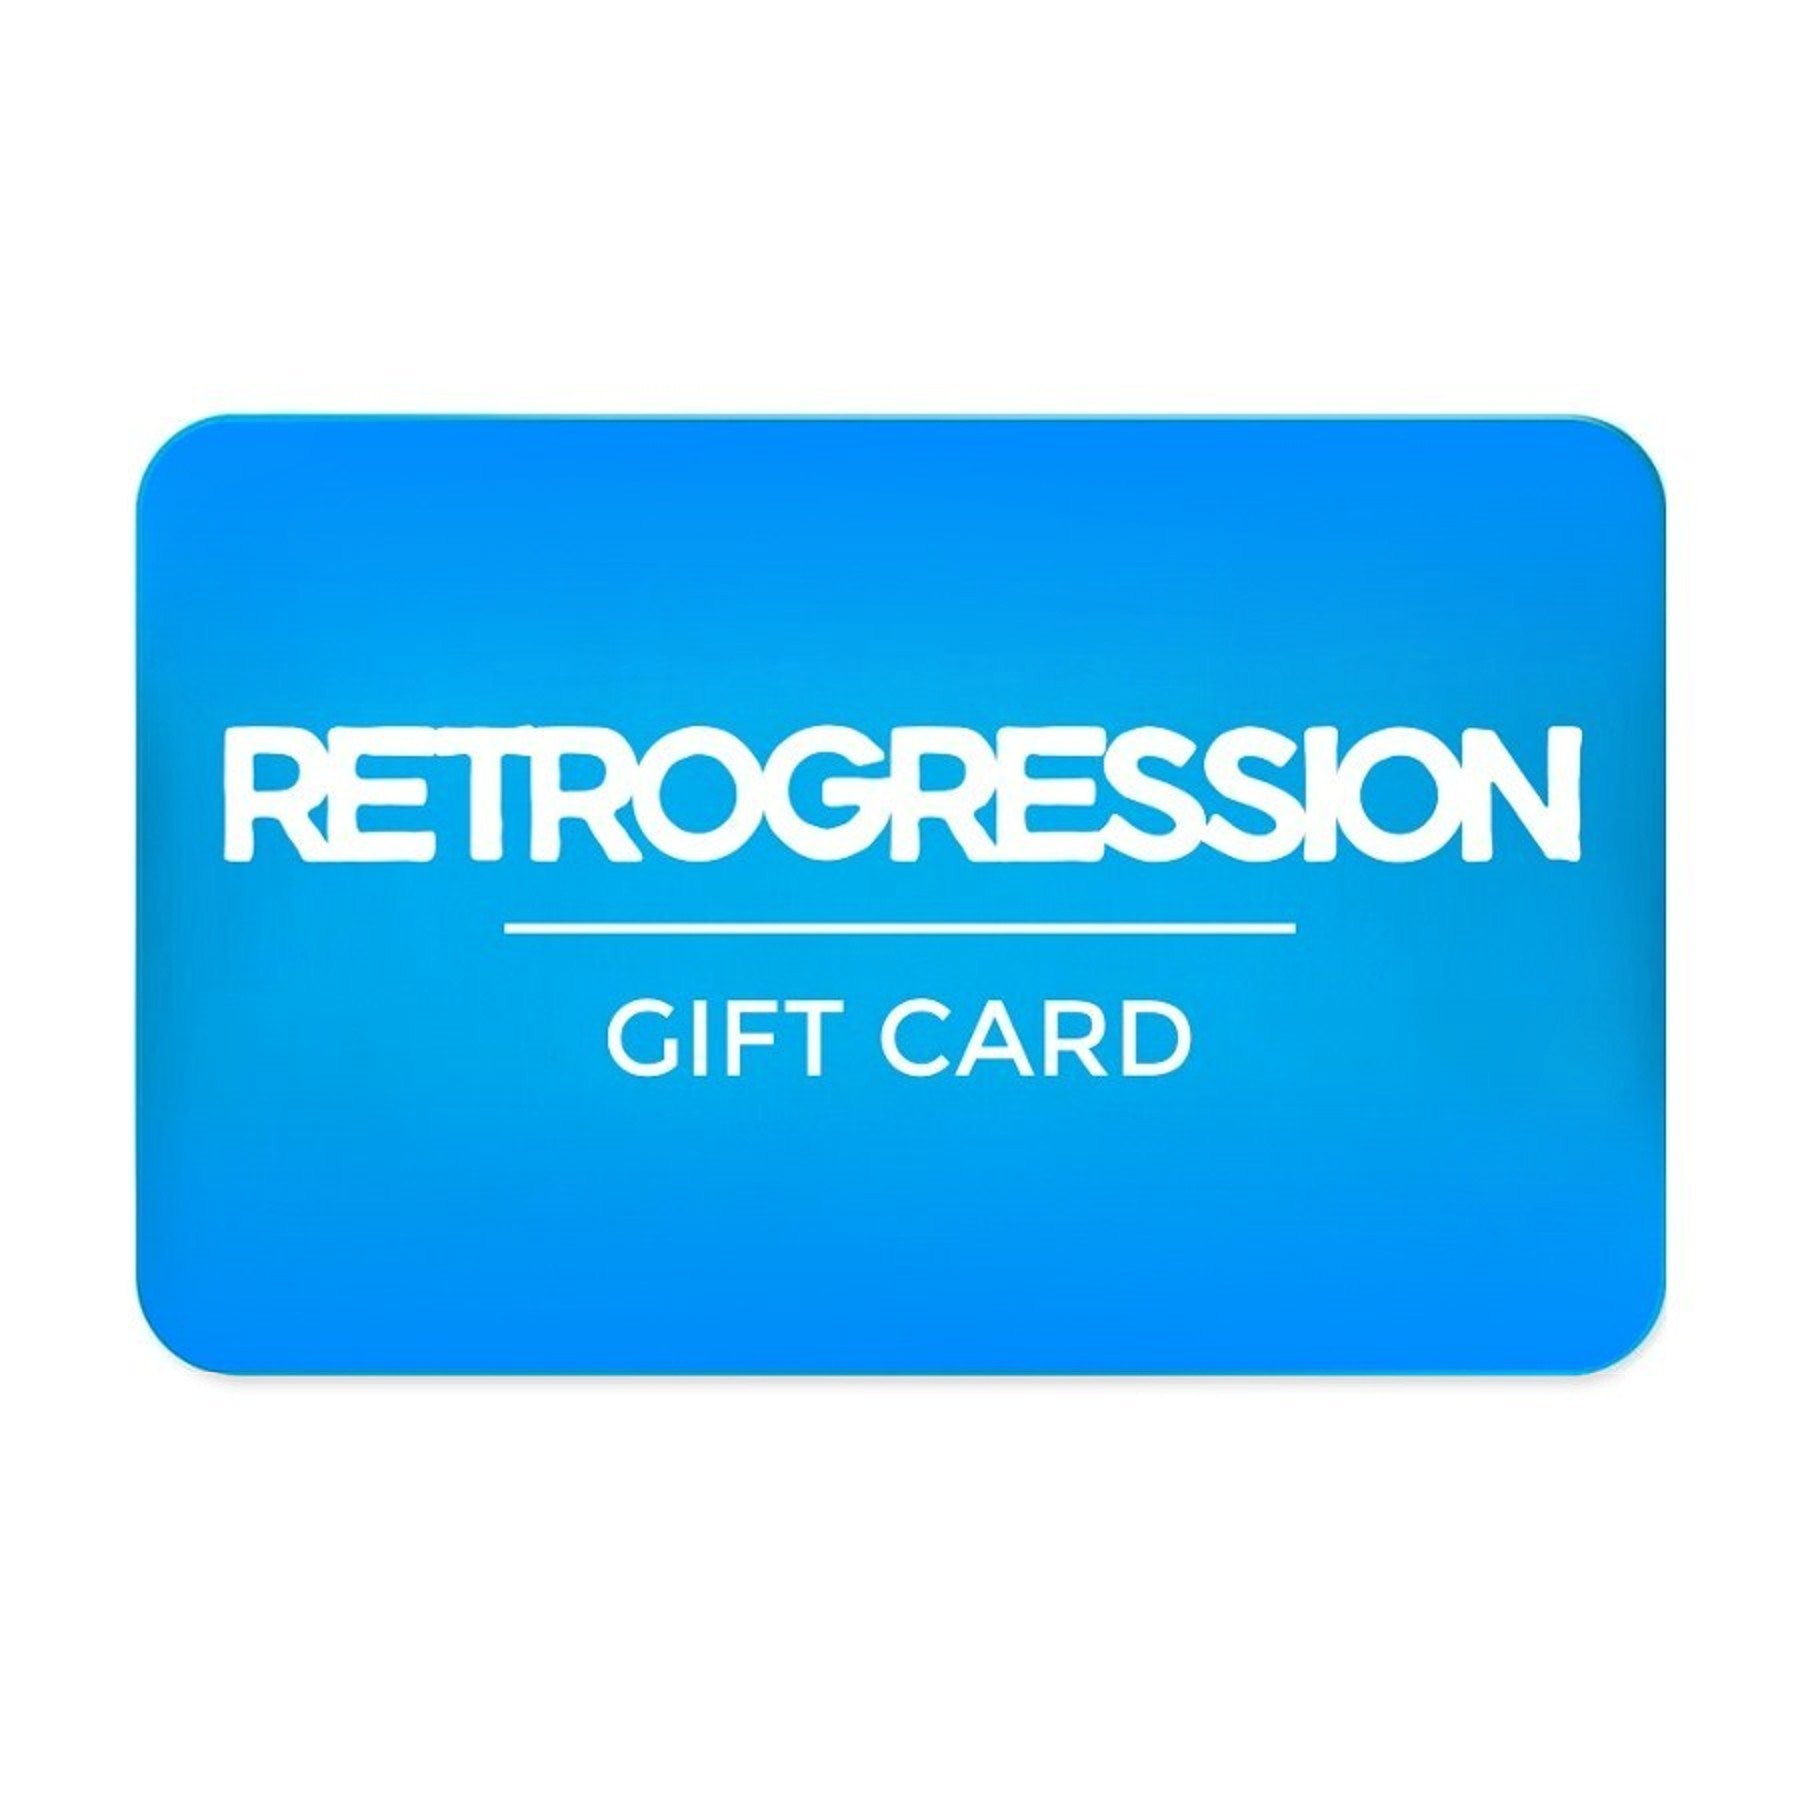 Retrogression Gift Card - Retrogression Fixed Gear